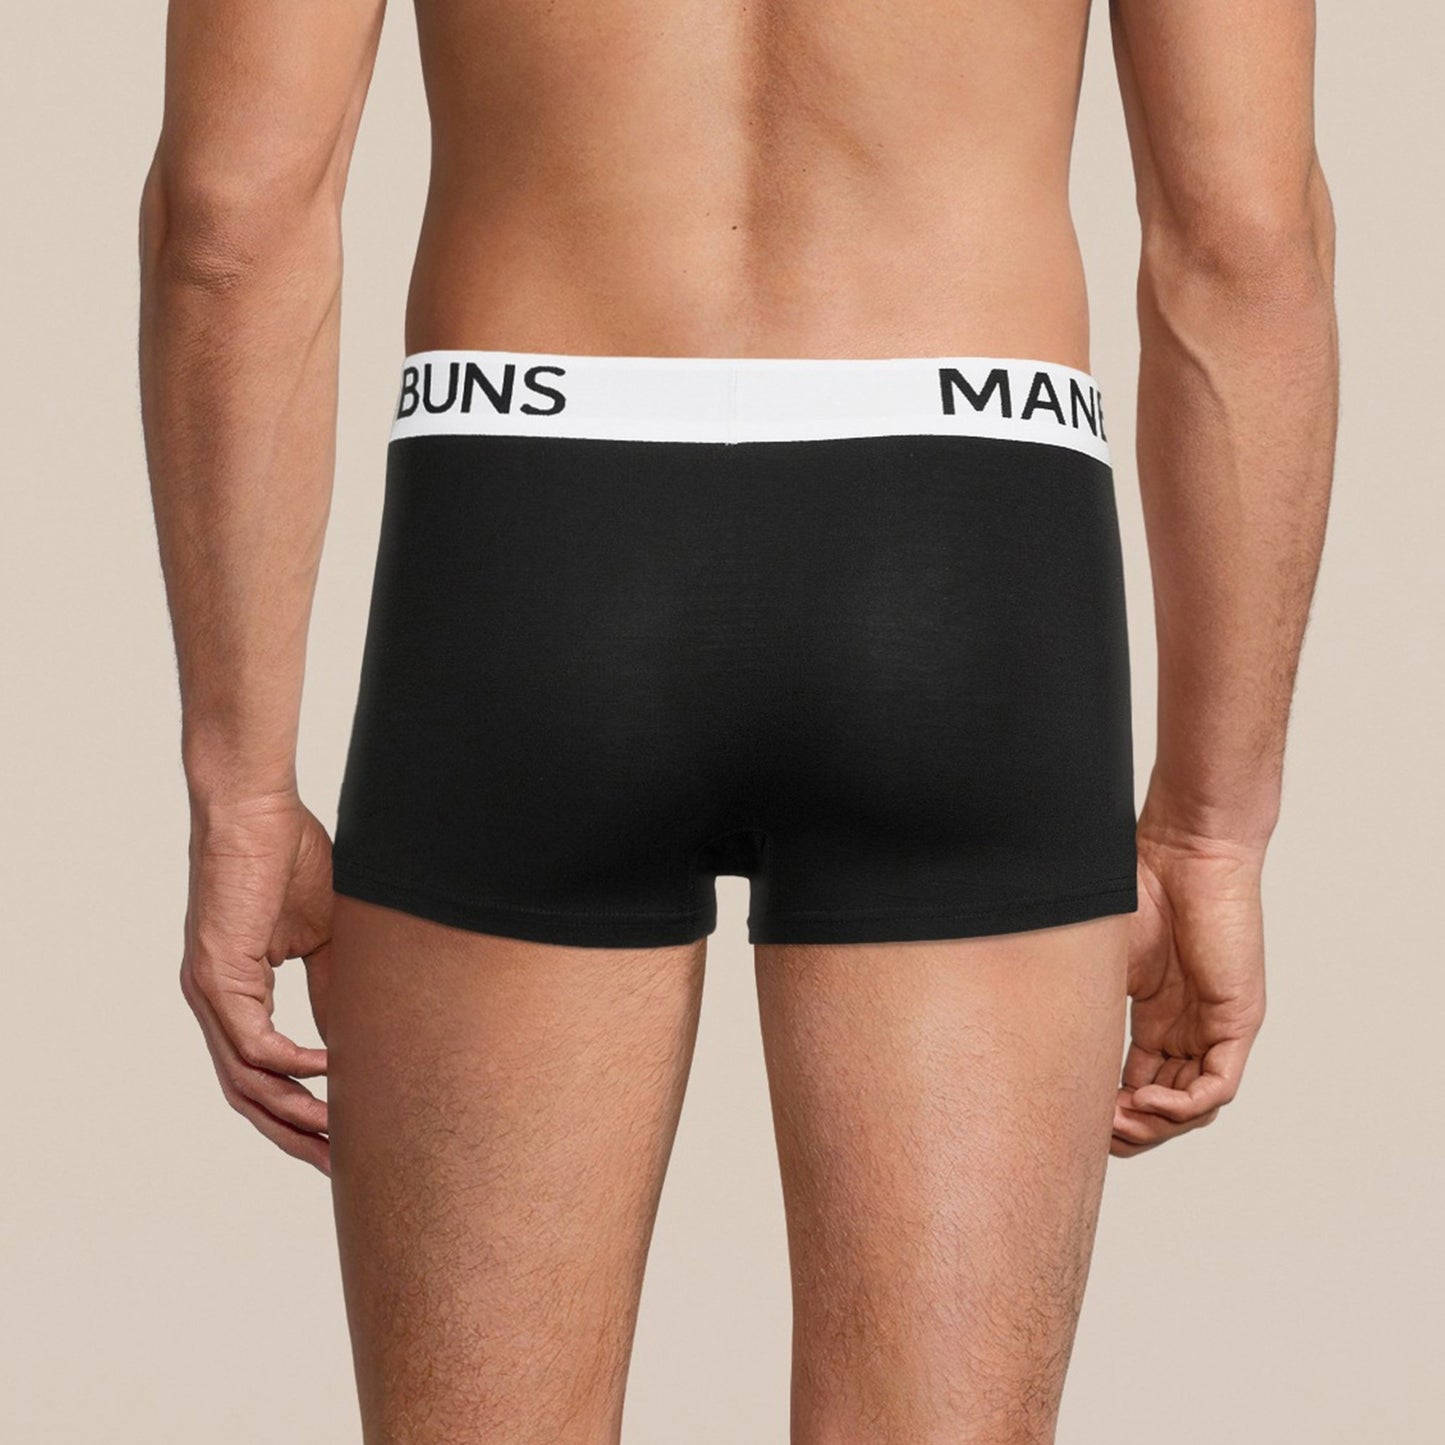 Men's Classic Black Boxer Trunk Underwear - MANBUNS Underwear & Socks Free Shipping